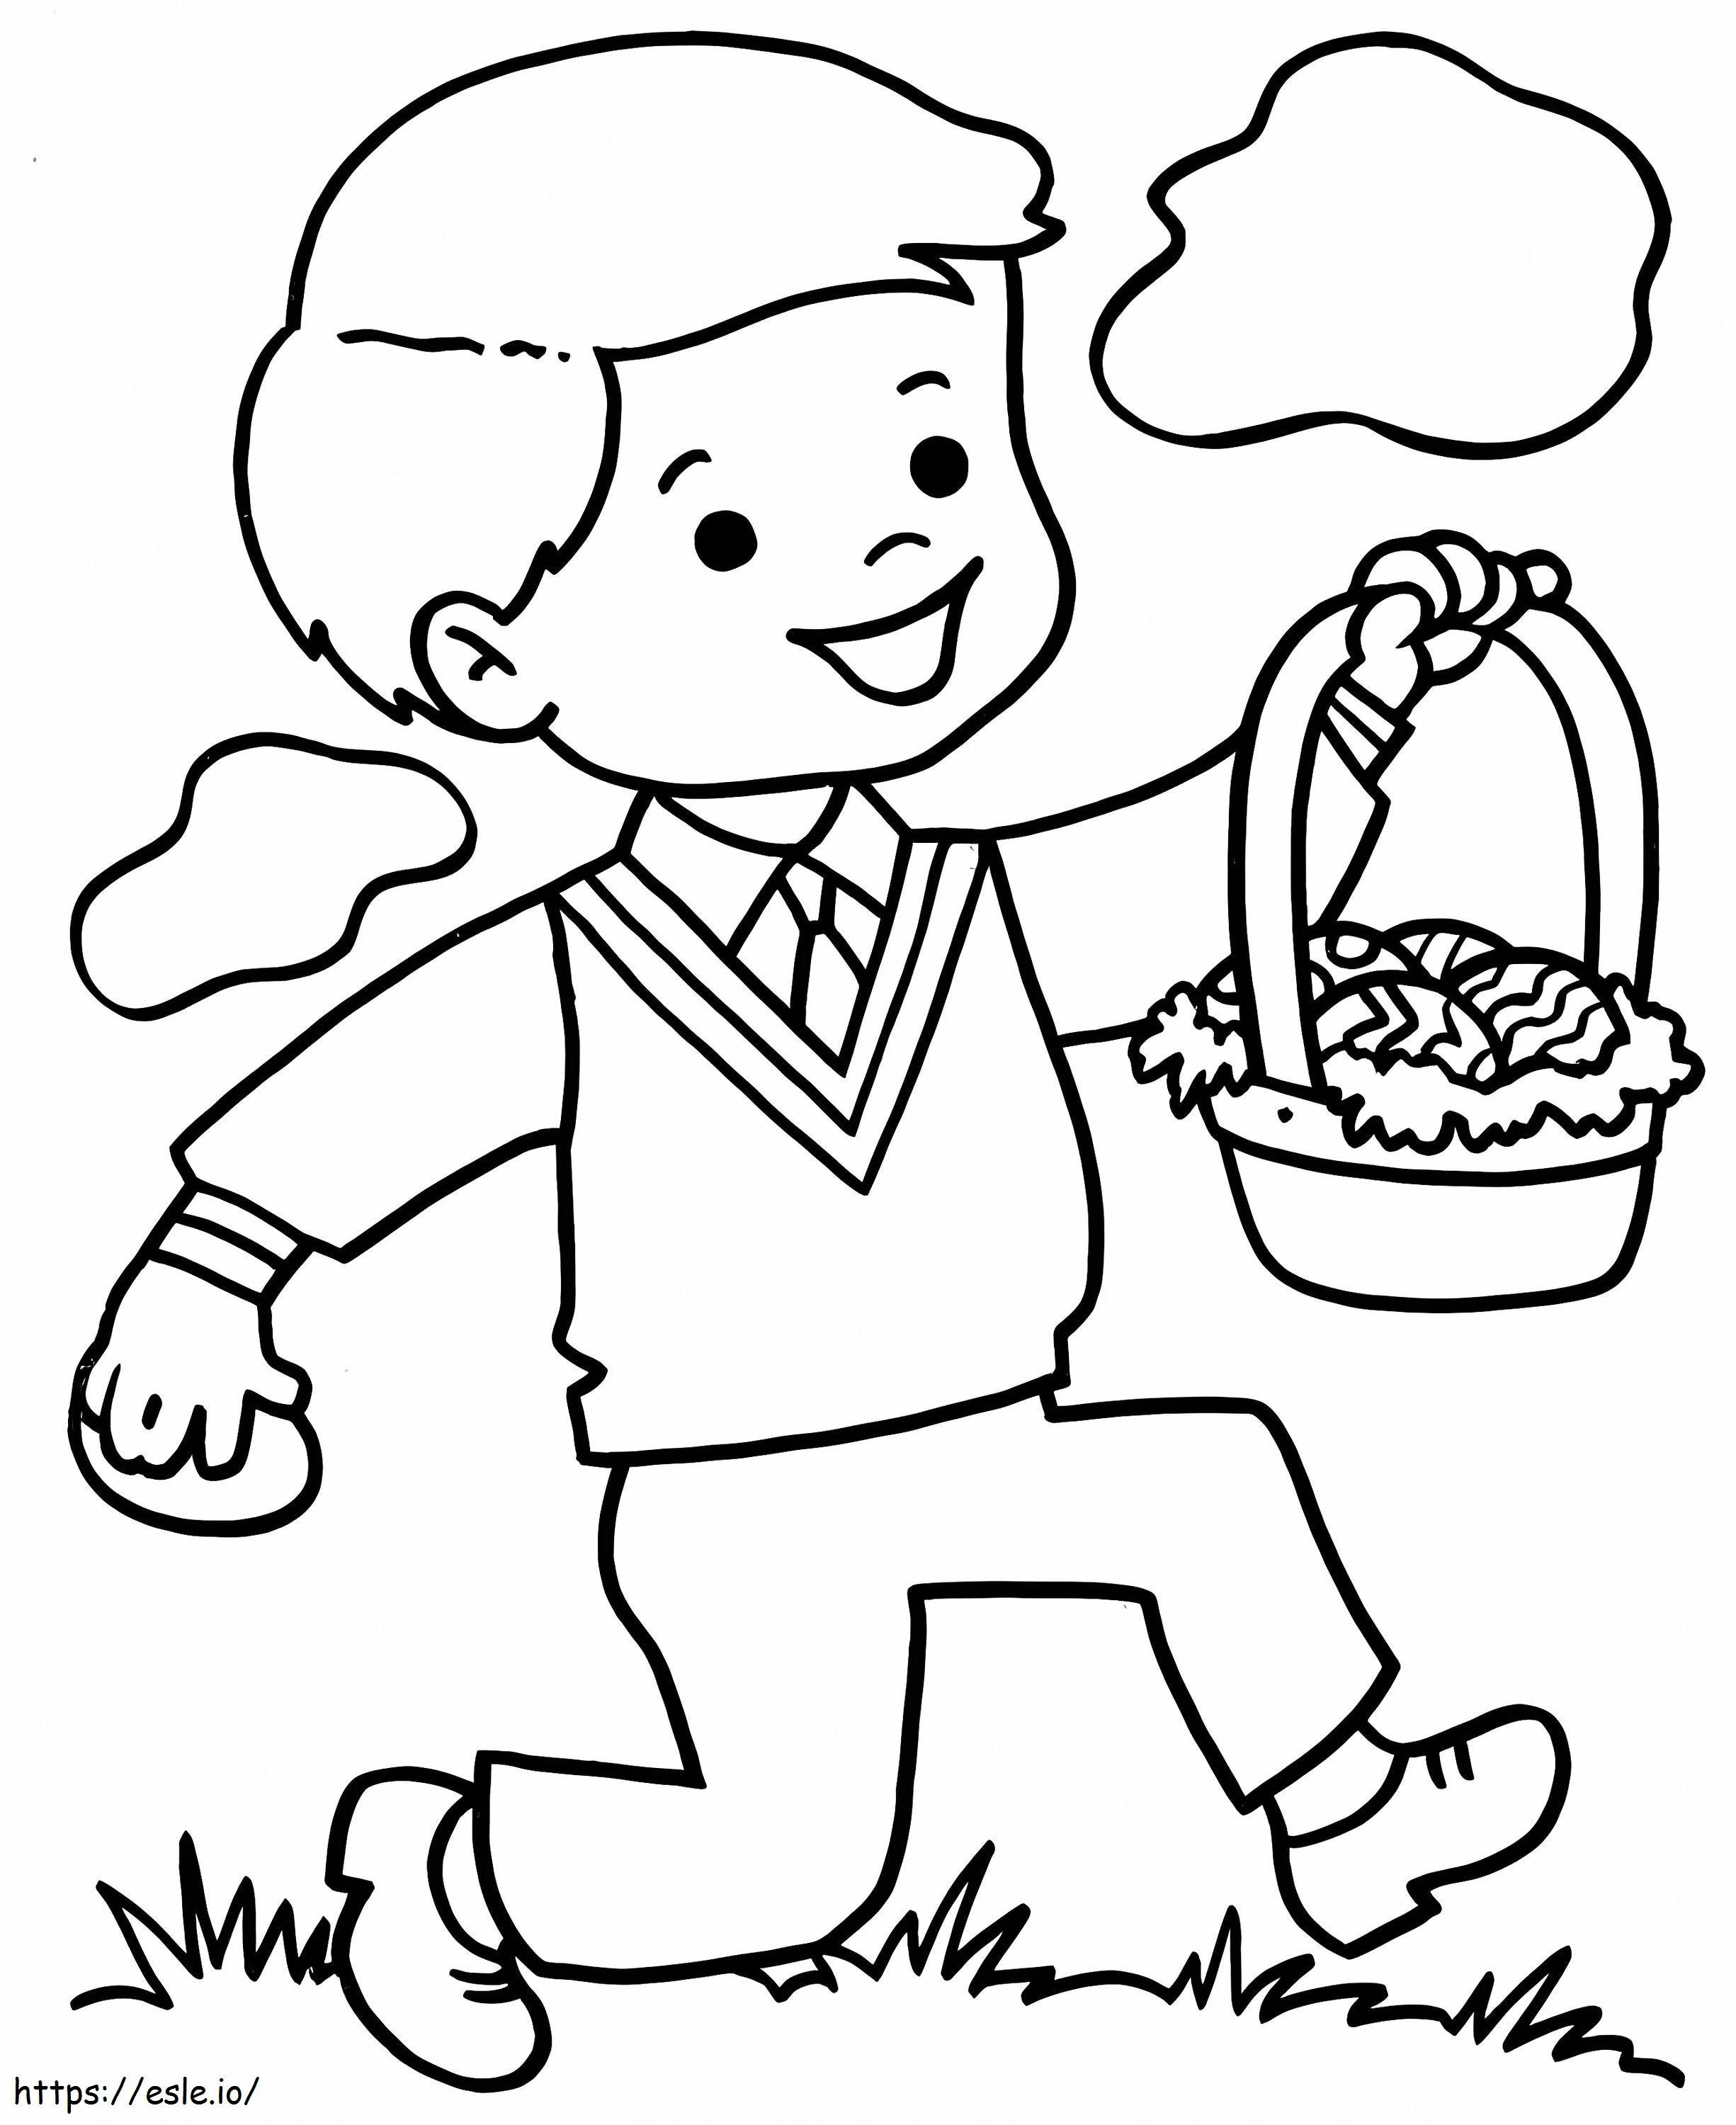 Băiat ținând coș de Paște de colorat